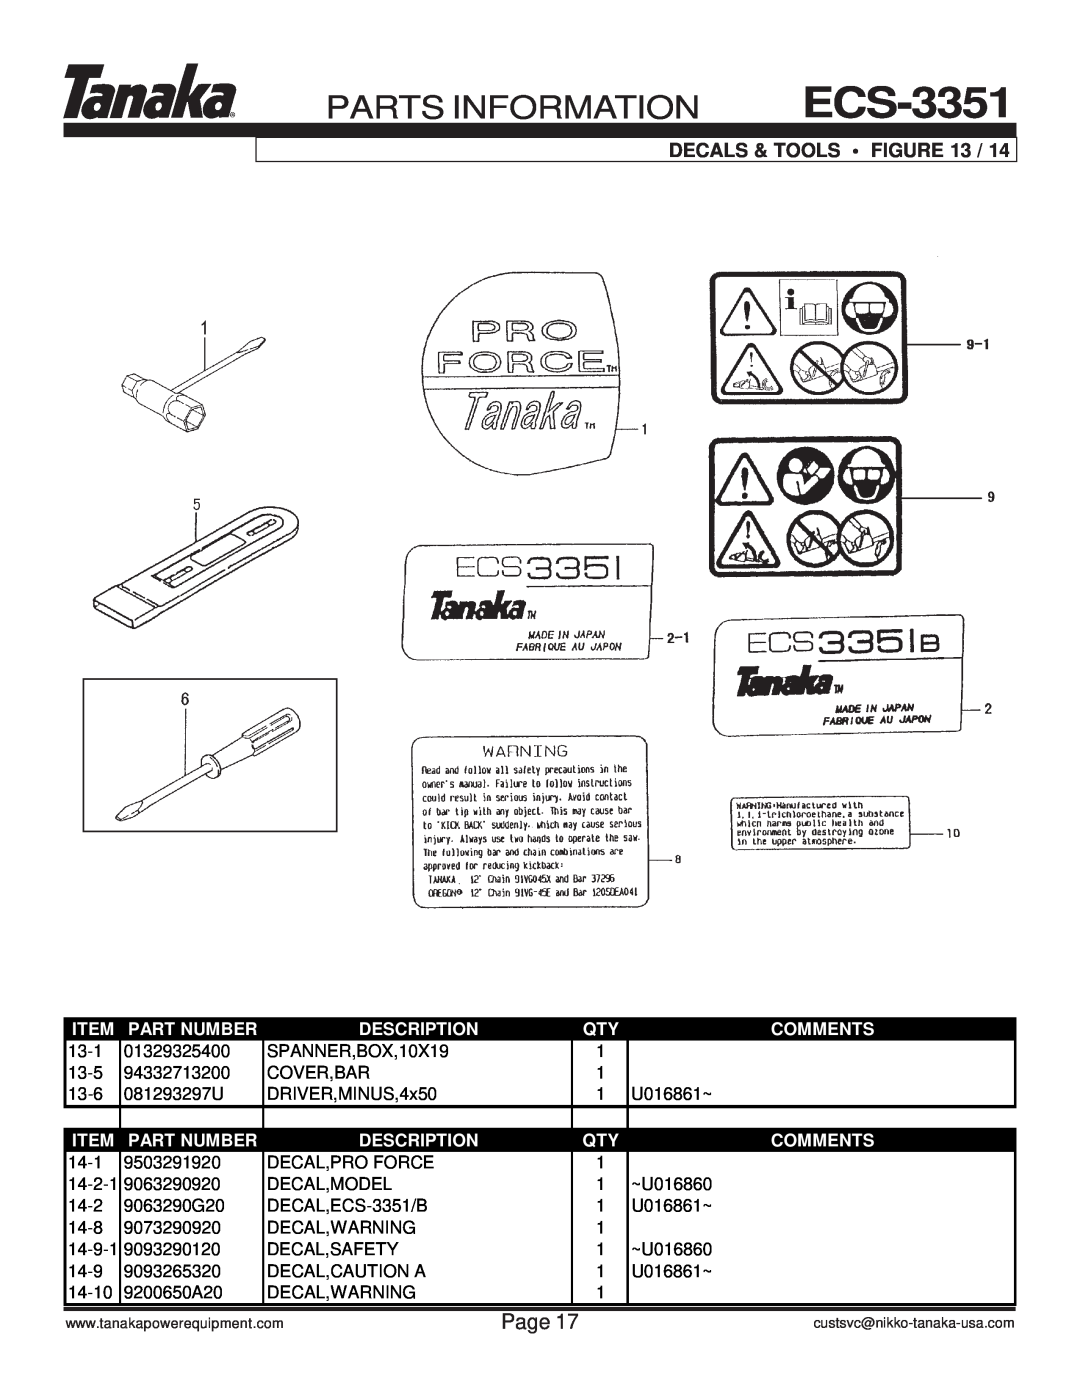 Tanaka ECS-3351/B manual Decals & Tools Figure, Parts Information, Page, Part Number, Description, Comments 